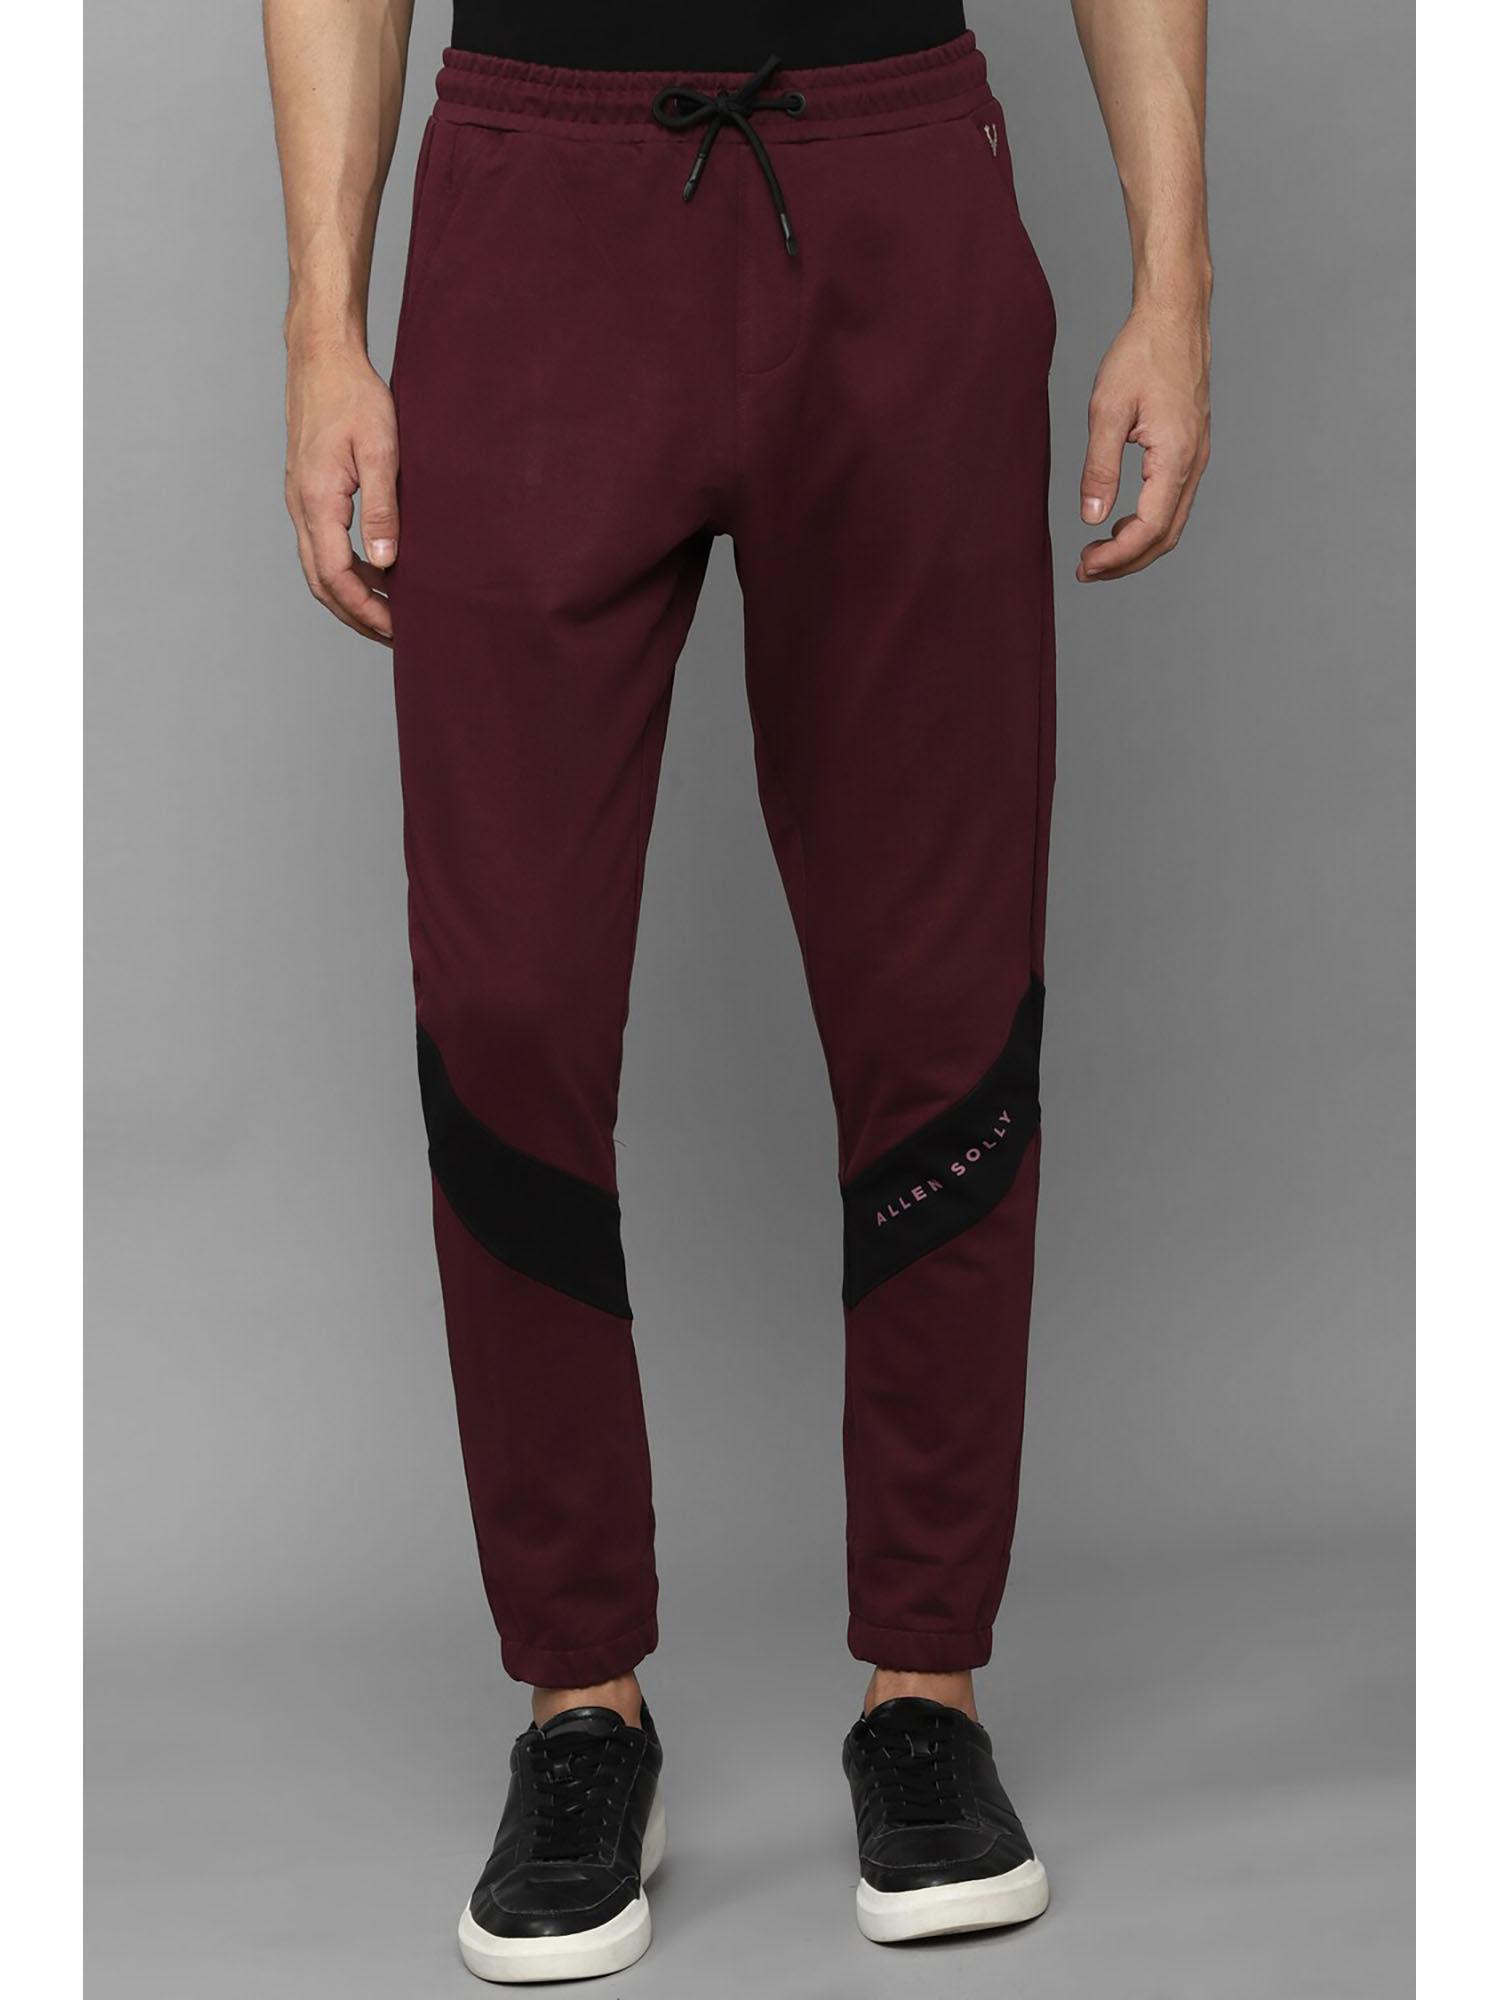 men-colorblock-regular-fit-maroon-track-pants